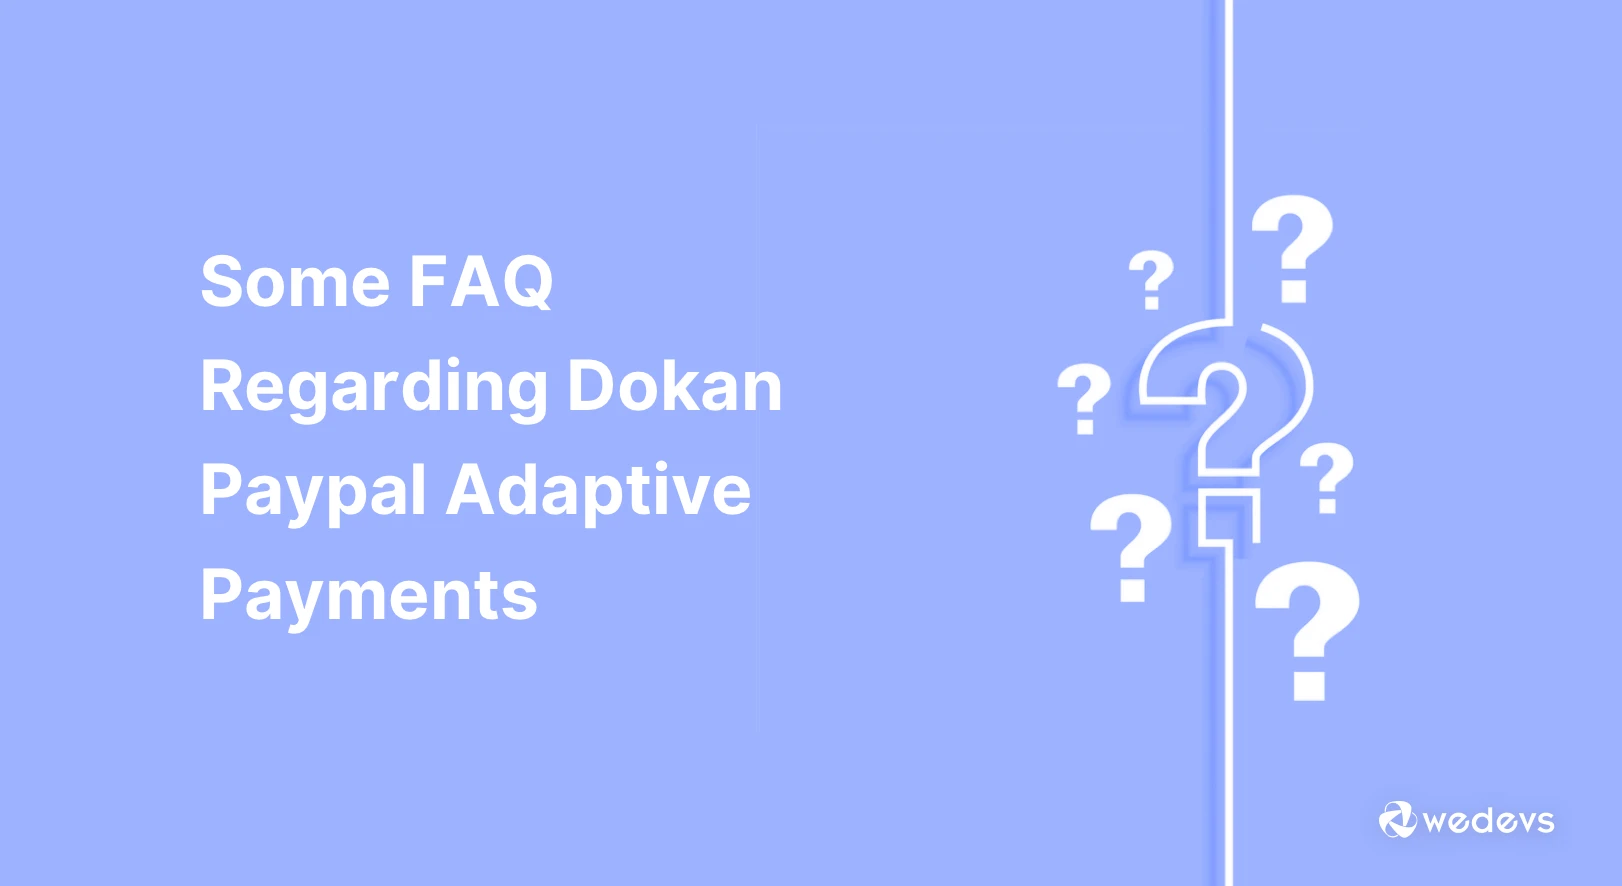 Some FAQ Regarding Dokan Paypal Adaptive Payments